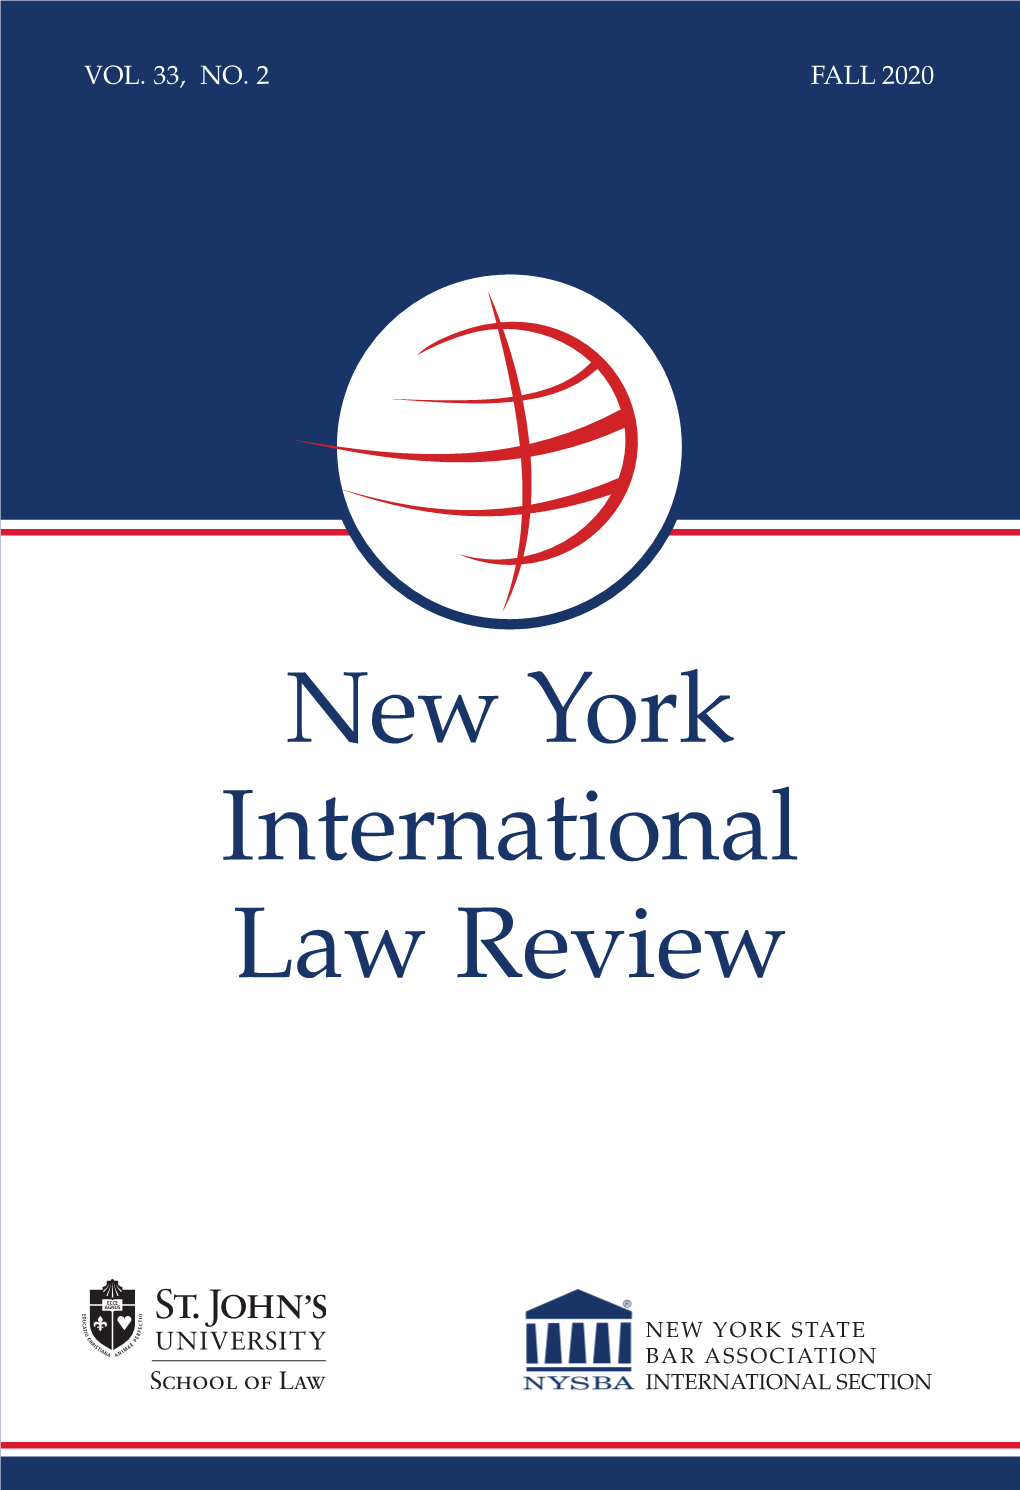 New York International Law Review Fall 2020 (Vol. 33, No. 2)